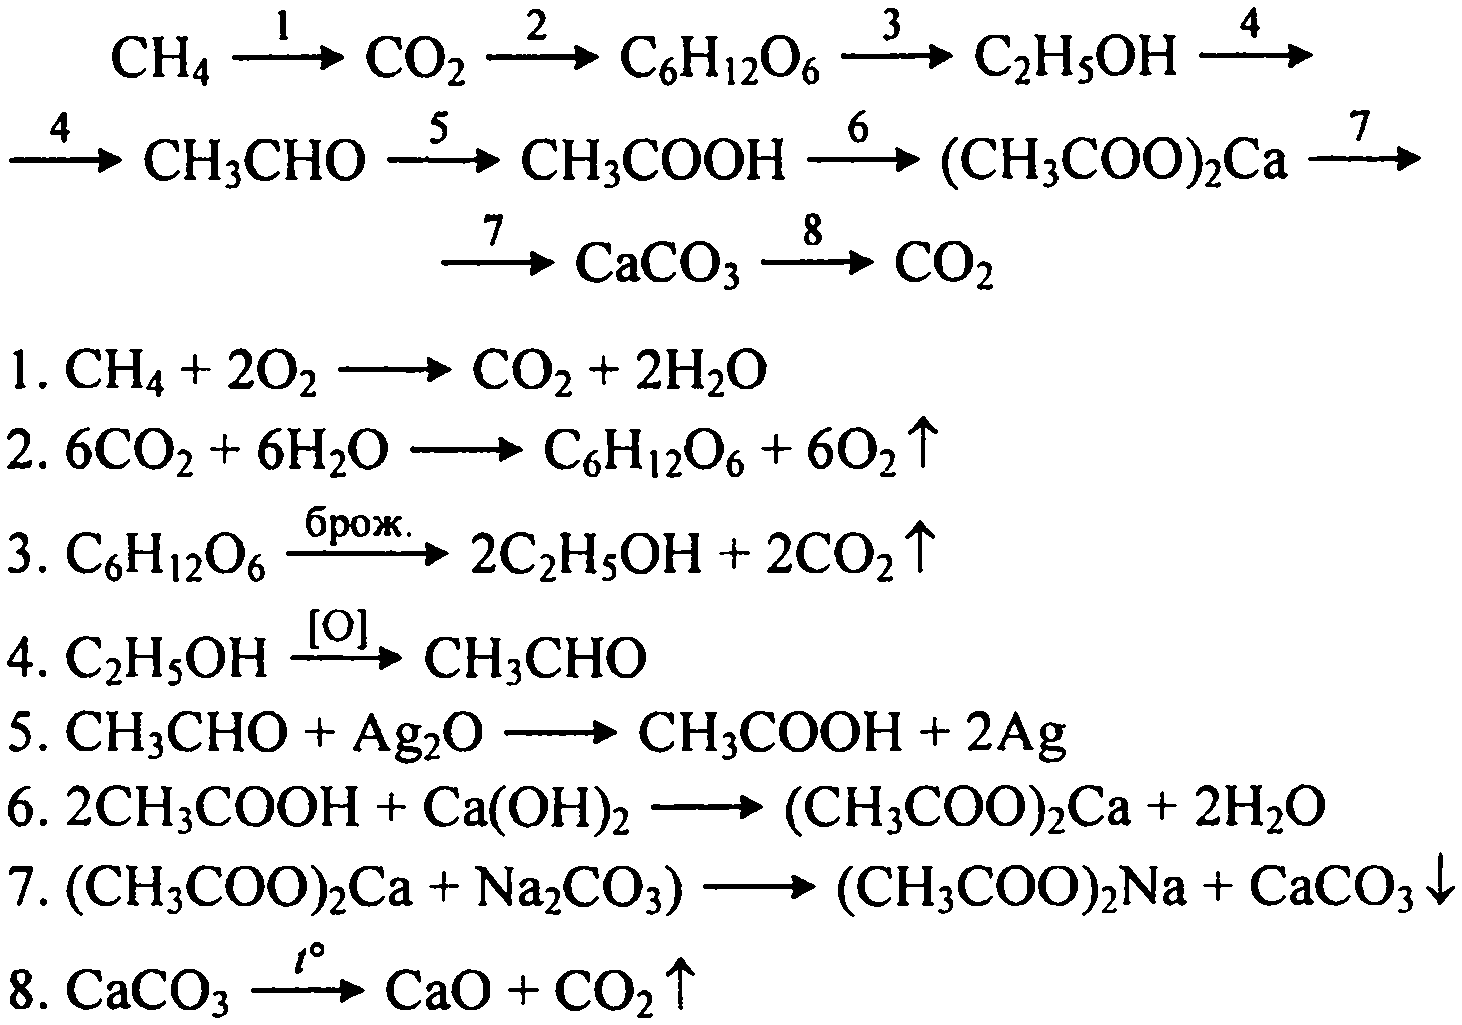 Cac2 h2so4. Химическая цепочка c-ch4-co2-caco3. Химическая цепочка ch4 co2. Химическая цепочка реакции c2h5oh ch3. Уравнение реакции c+h2=ch4.